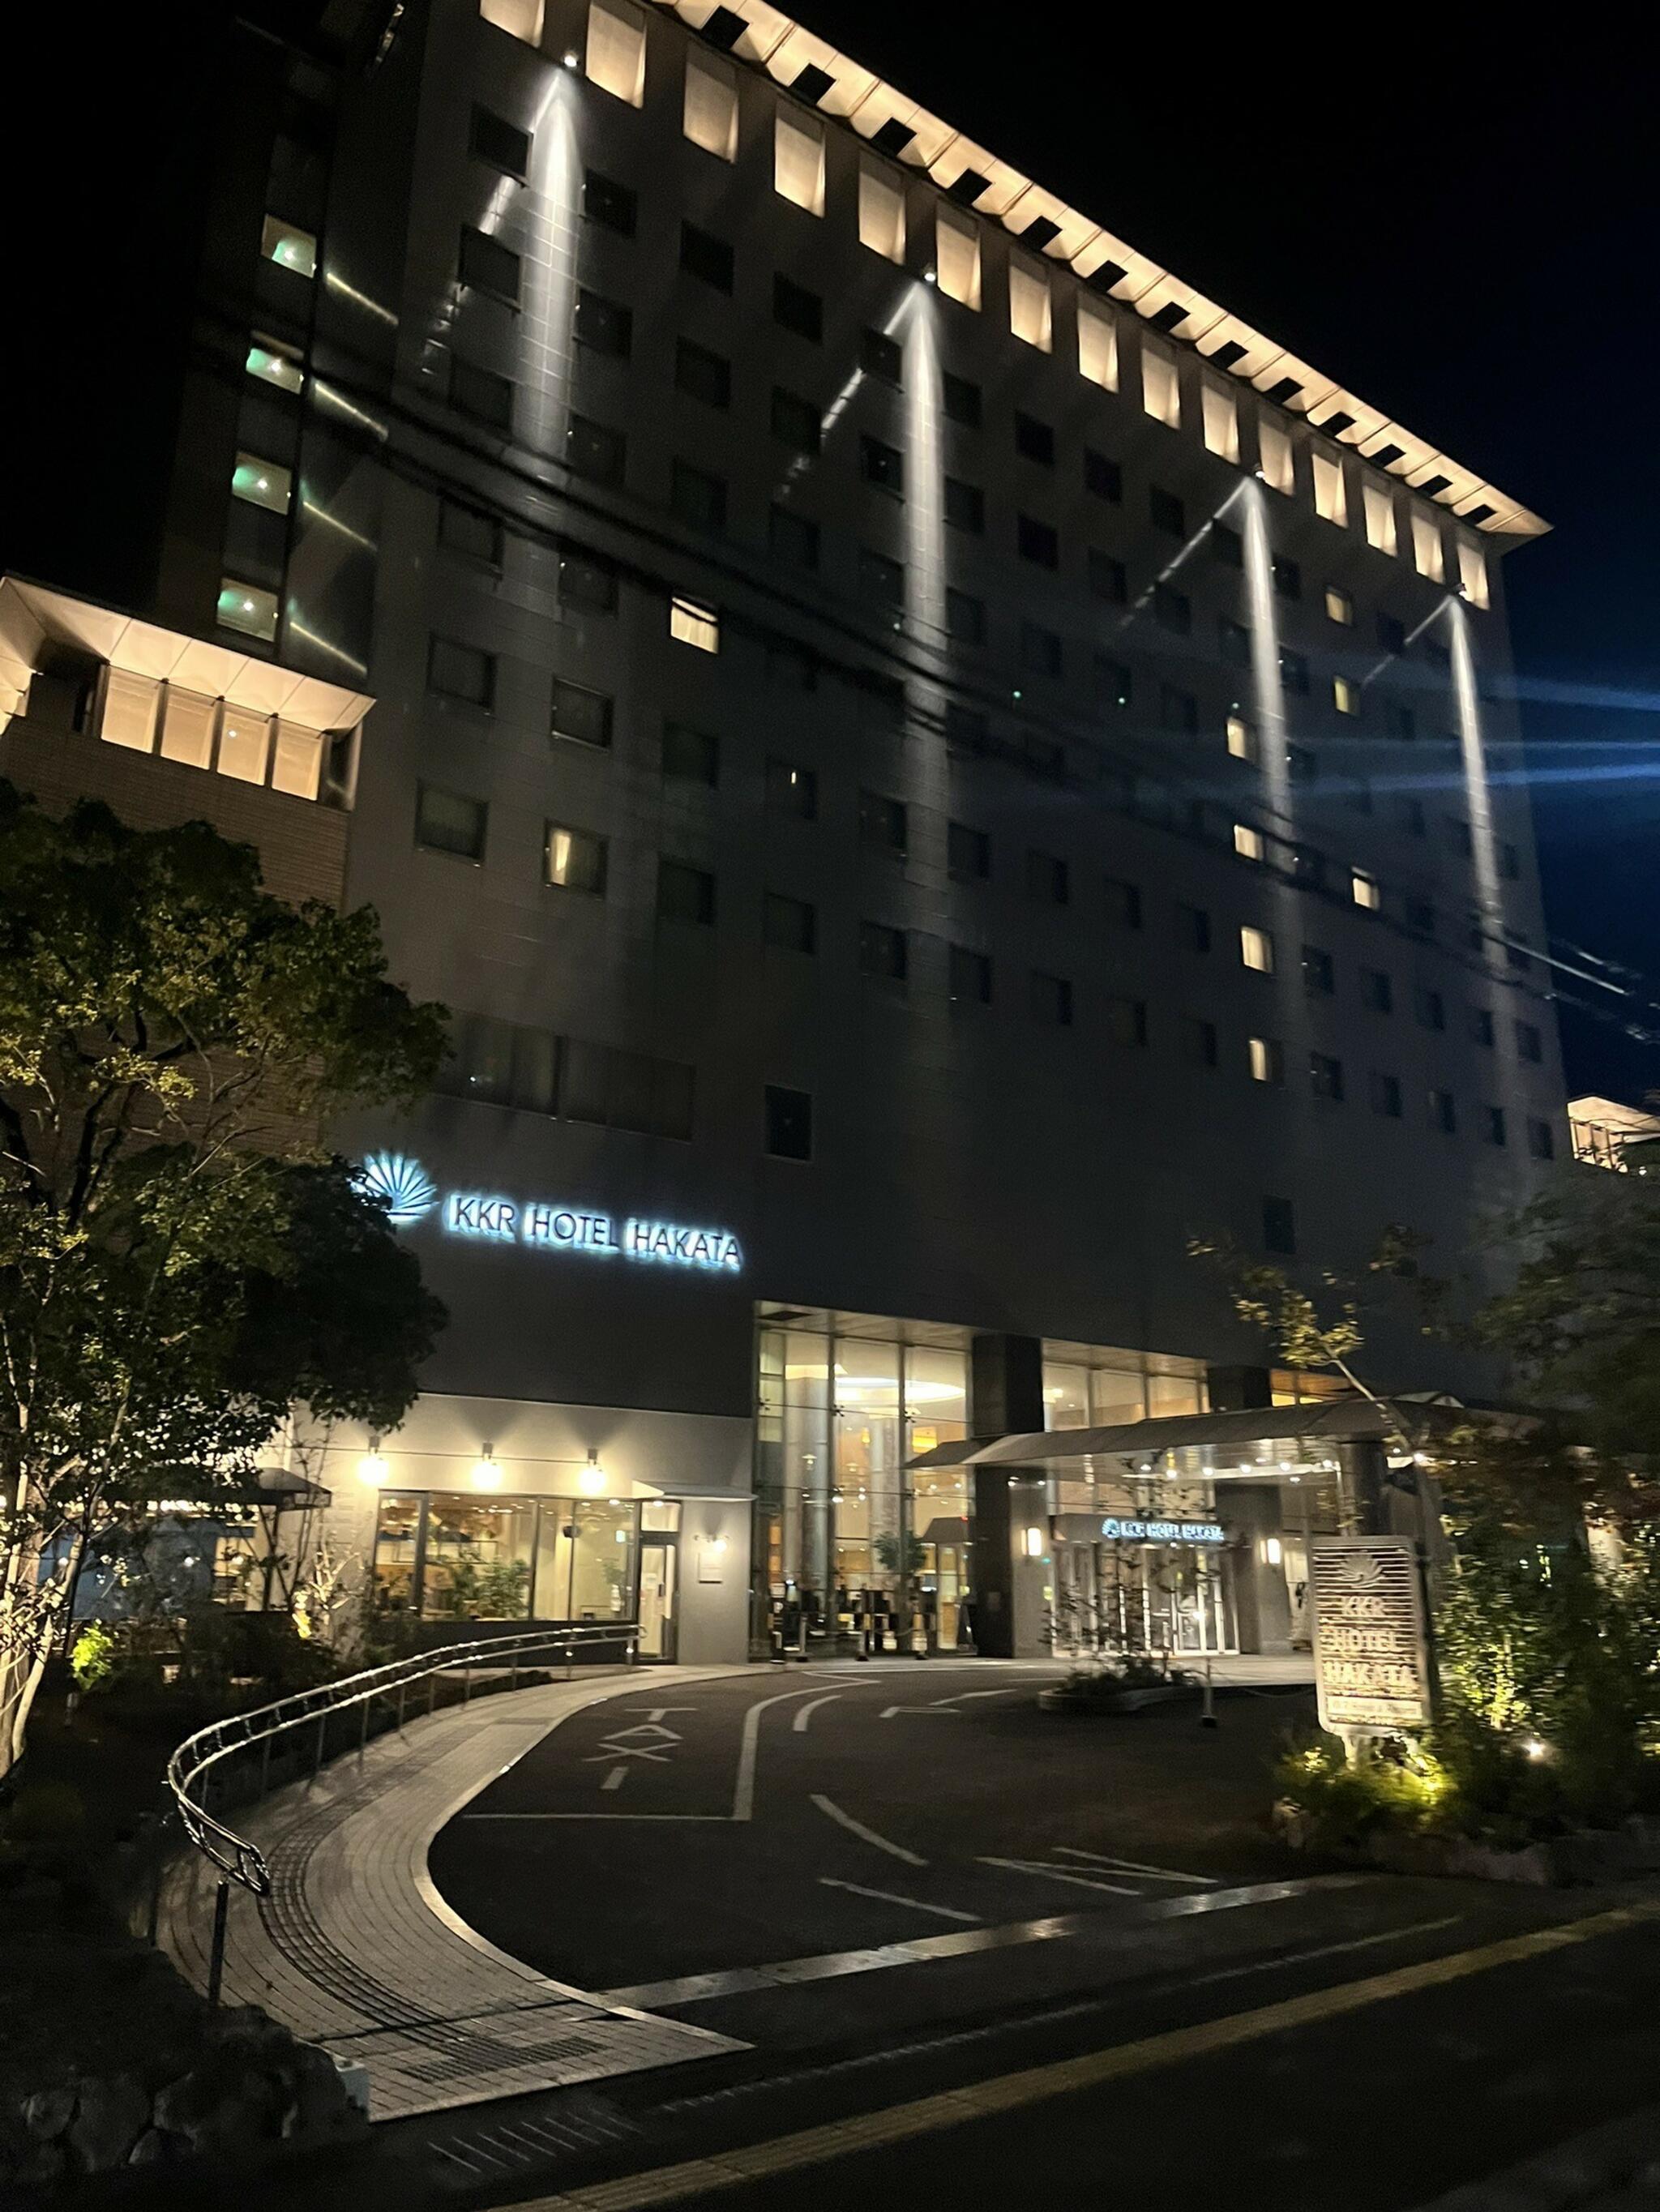 KKRホテル博多(国家公務員共済組合連合会福岡共済会館)の代表写真3